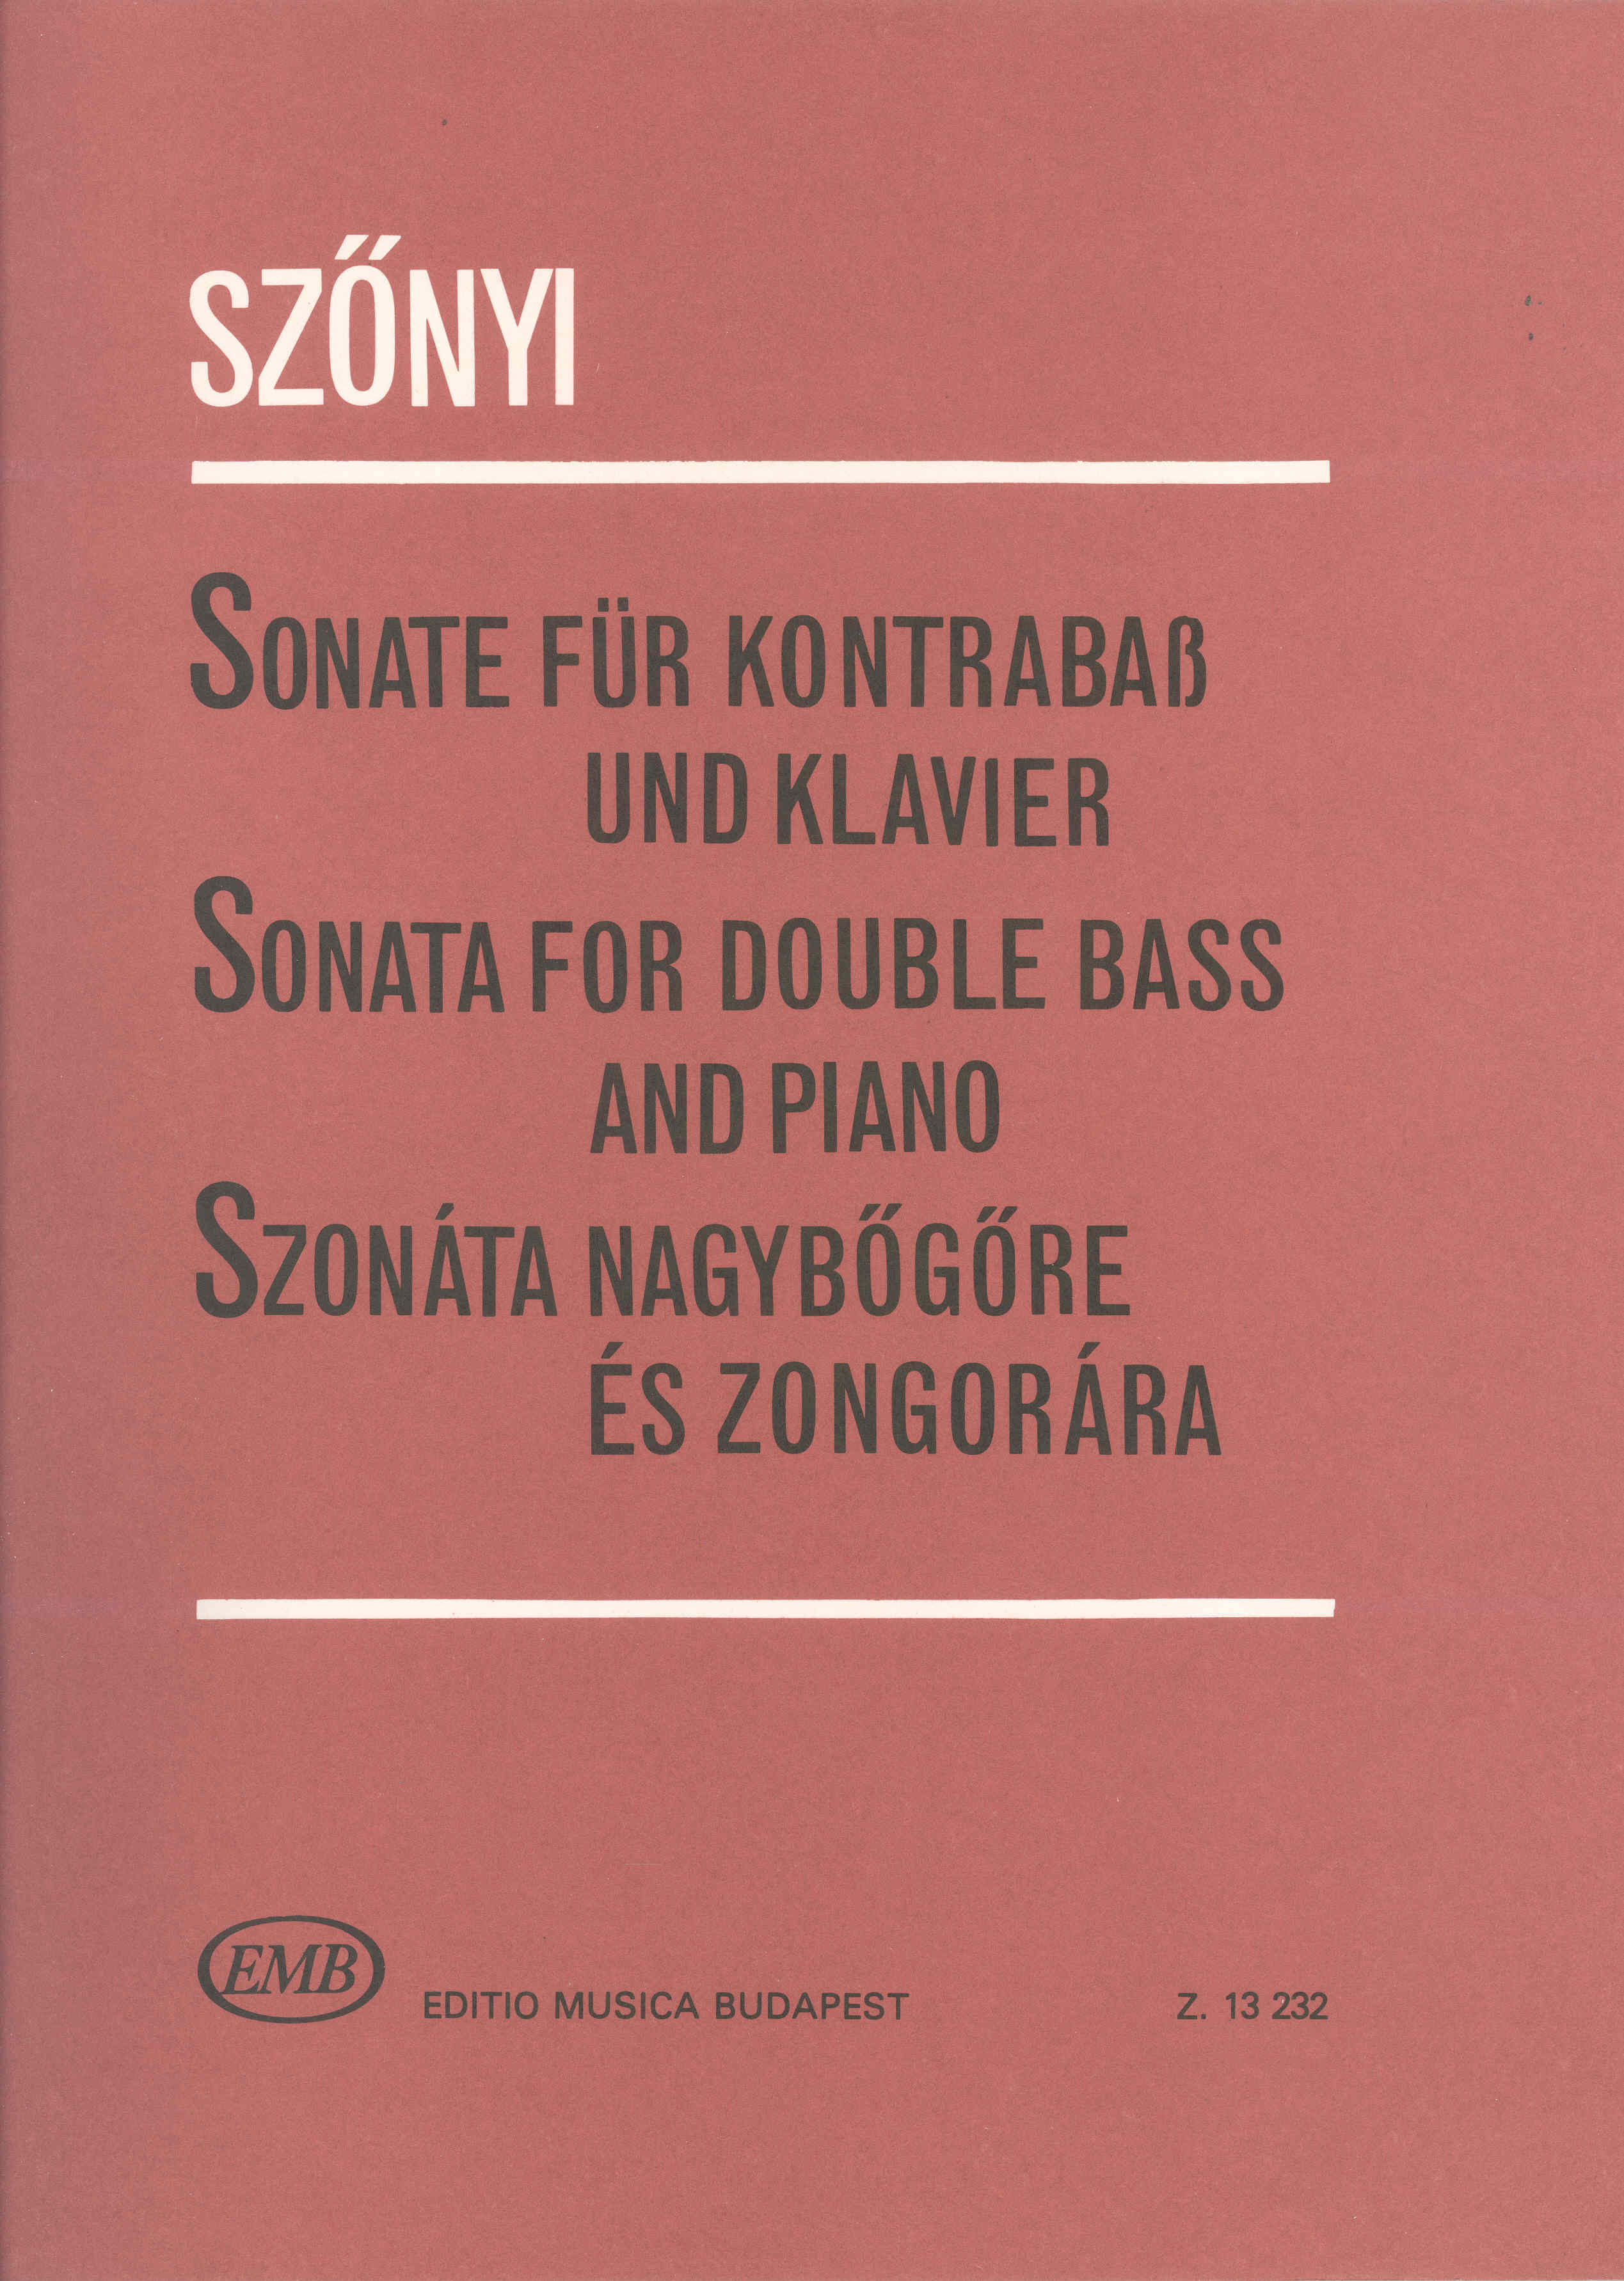 Szonyi Sonata For Double Bass & Piano Sheet Music Songbook